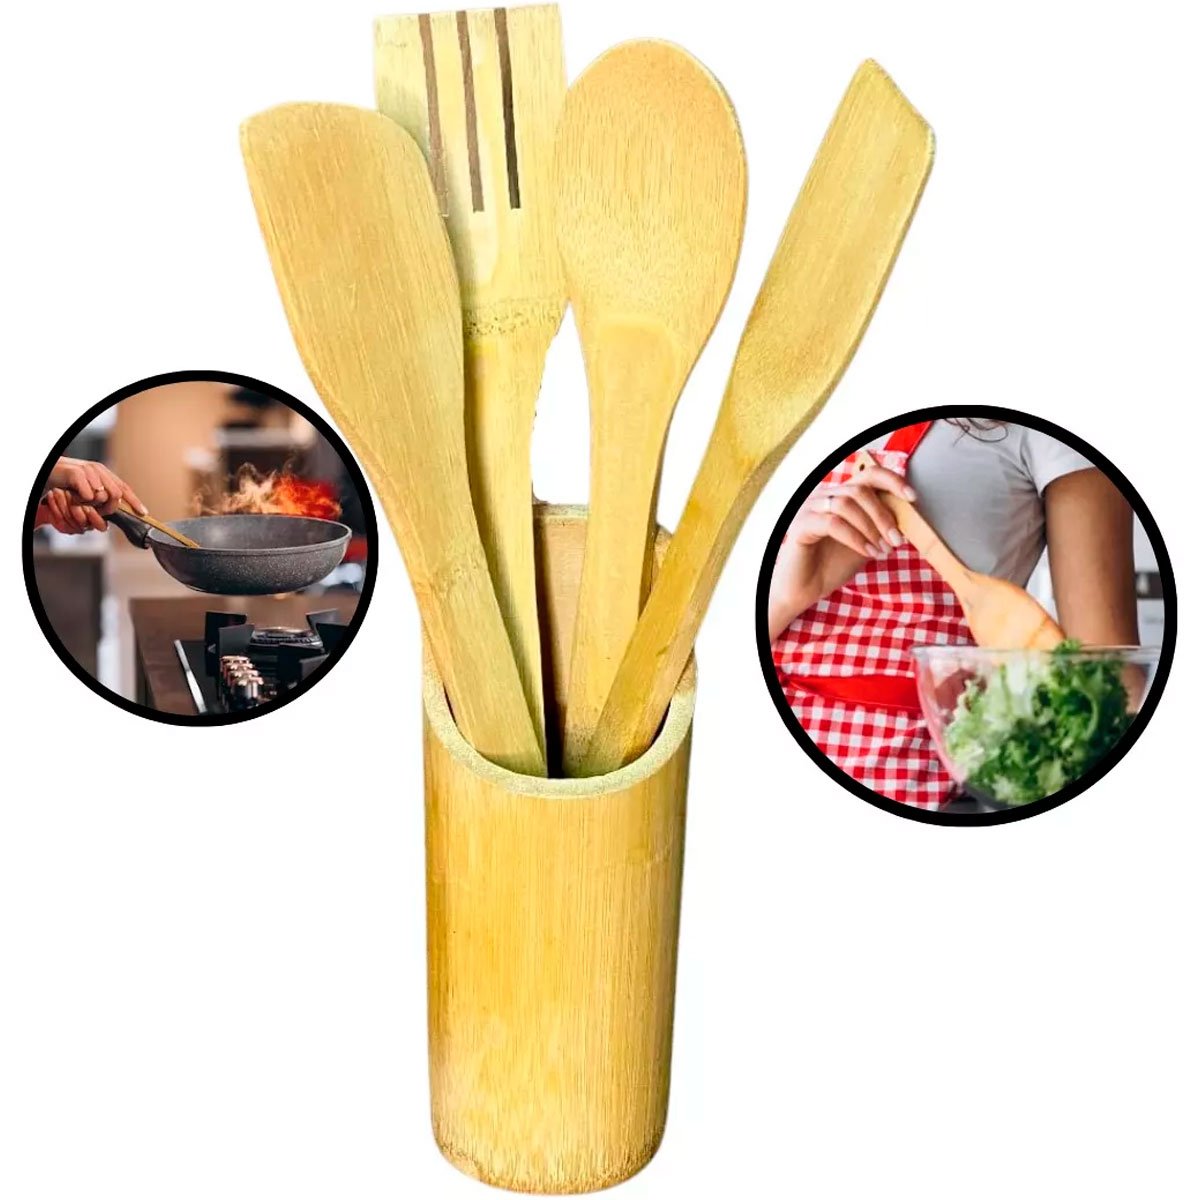 04 conjunto kit 5 utensilios de madeira bambu ecologico